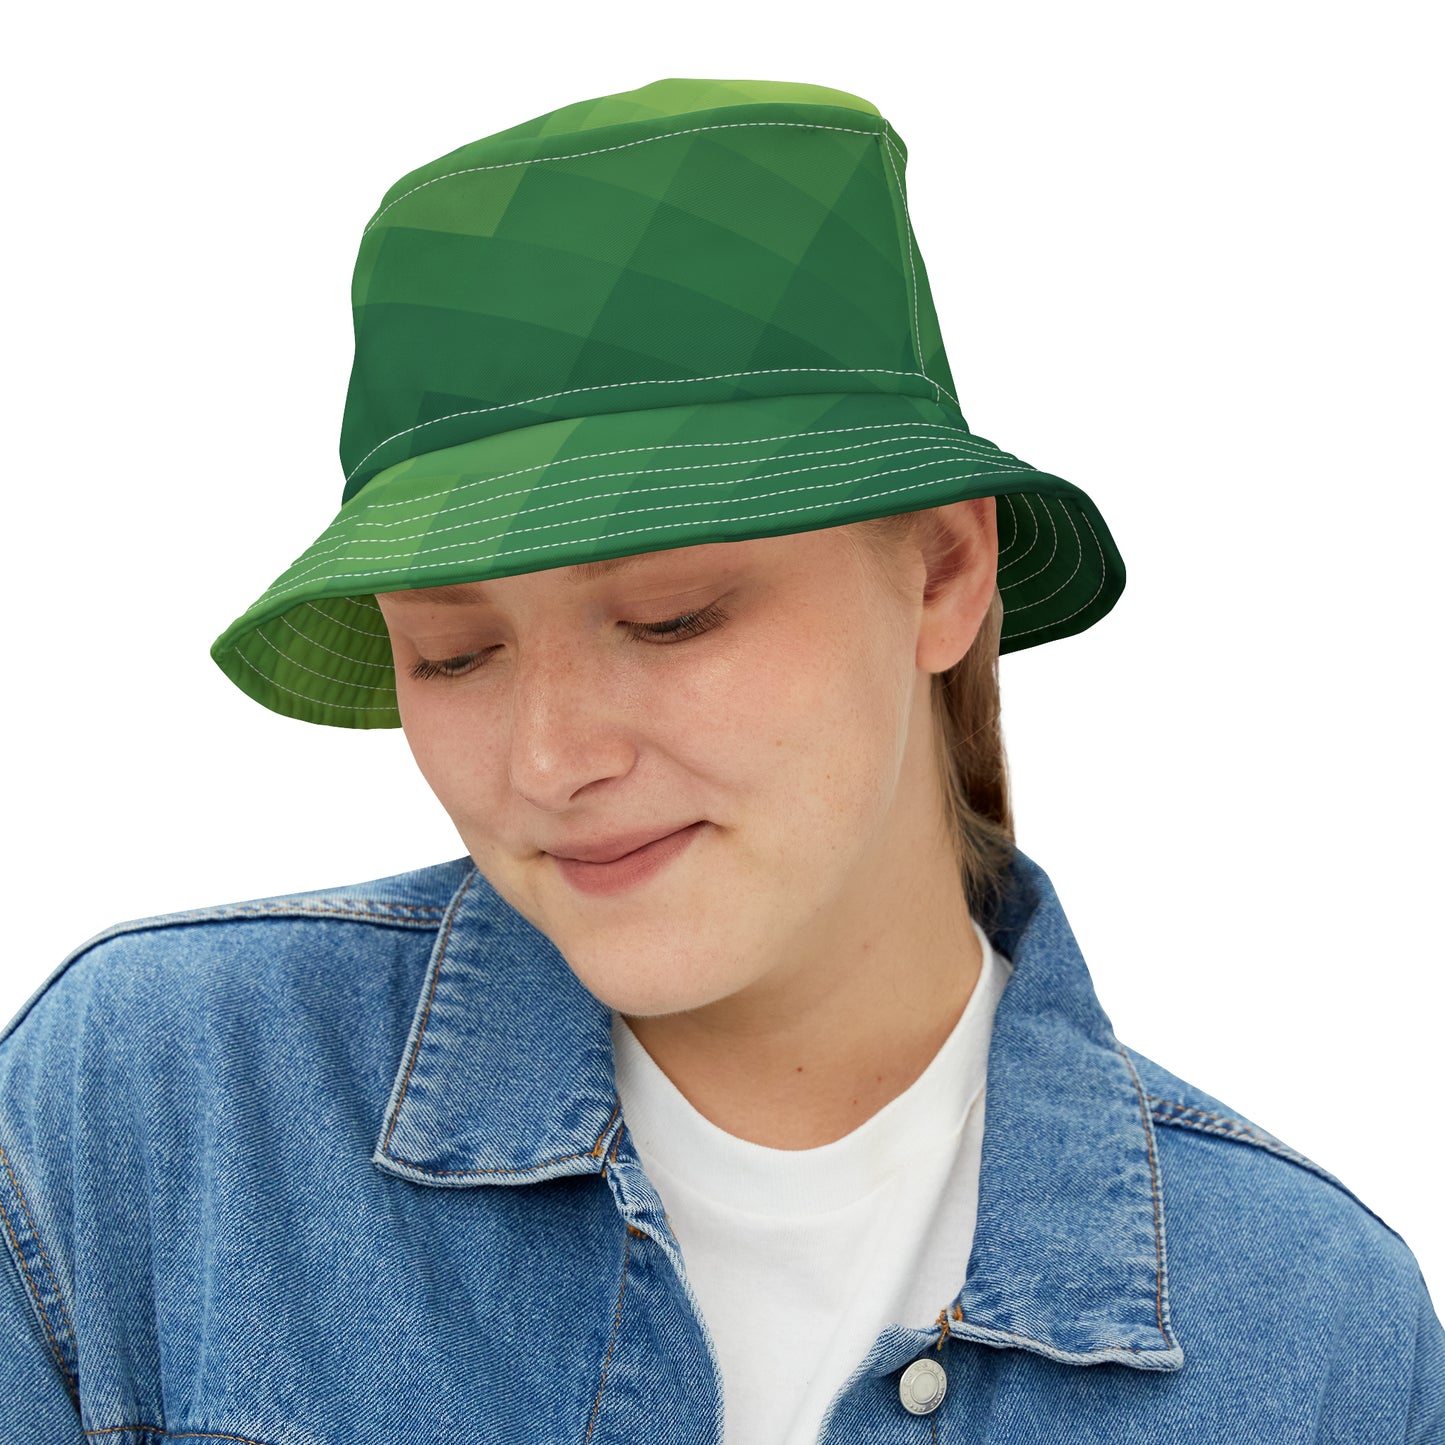 8-bit Green Hat